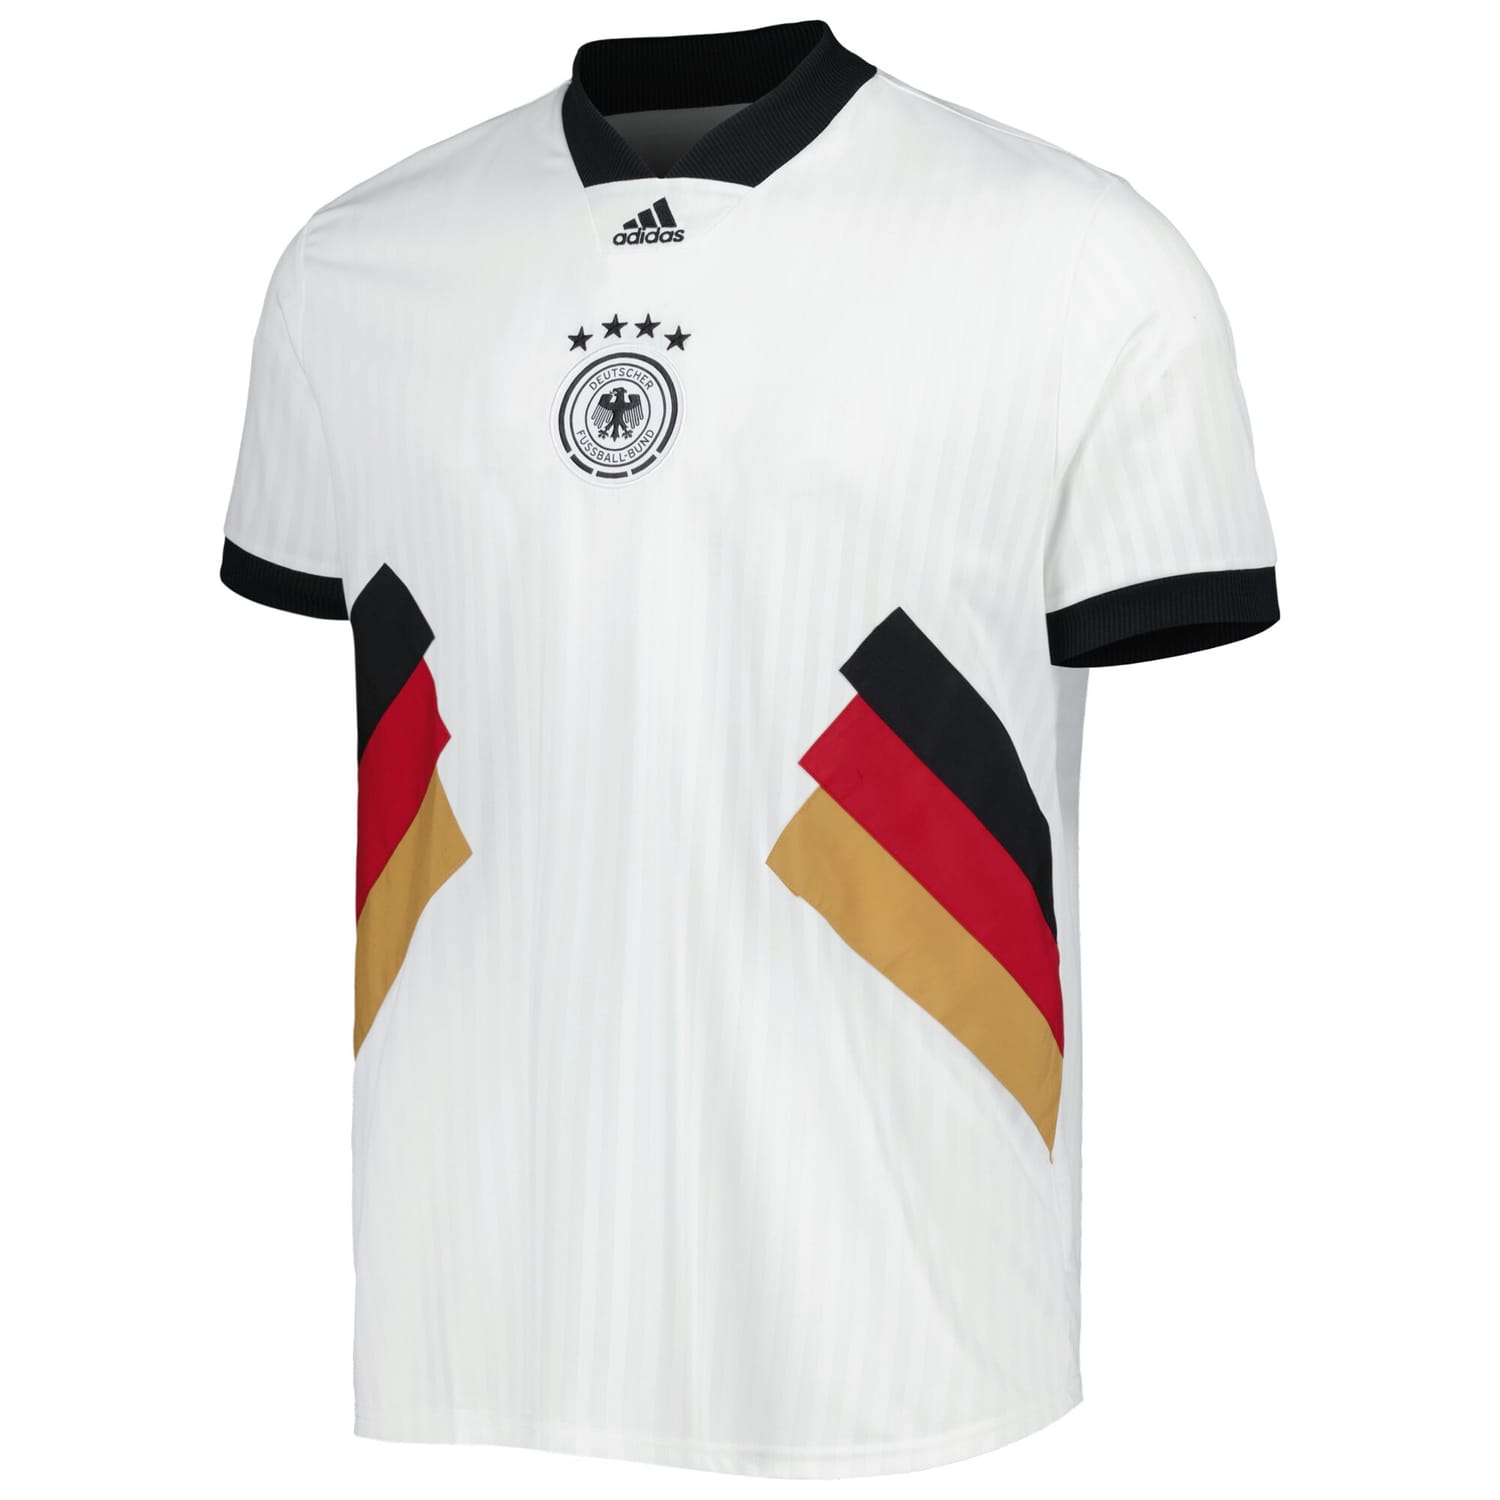 Germany National Team Jersey Shirt White for Men